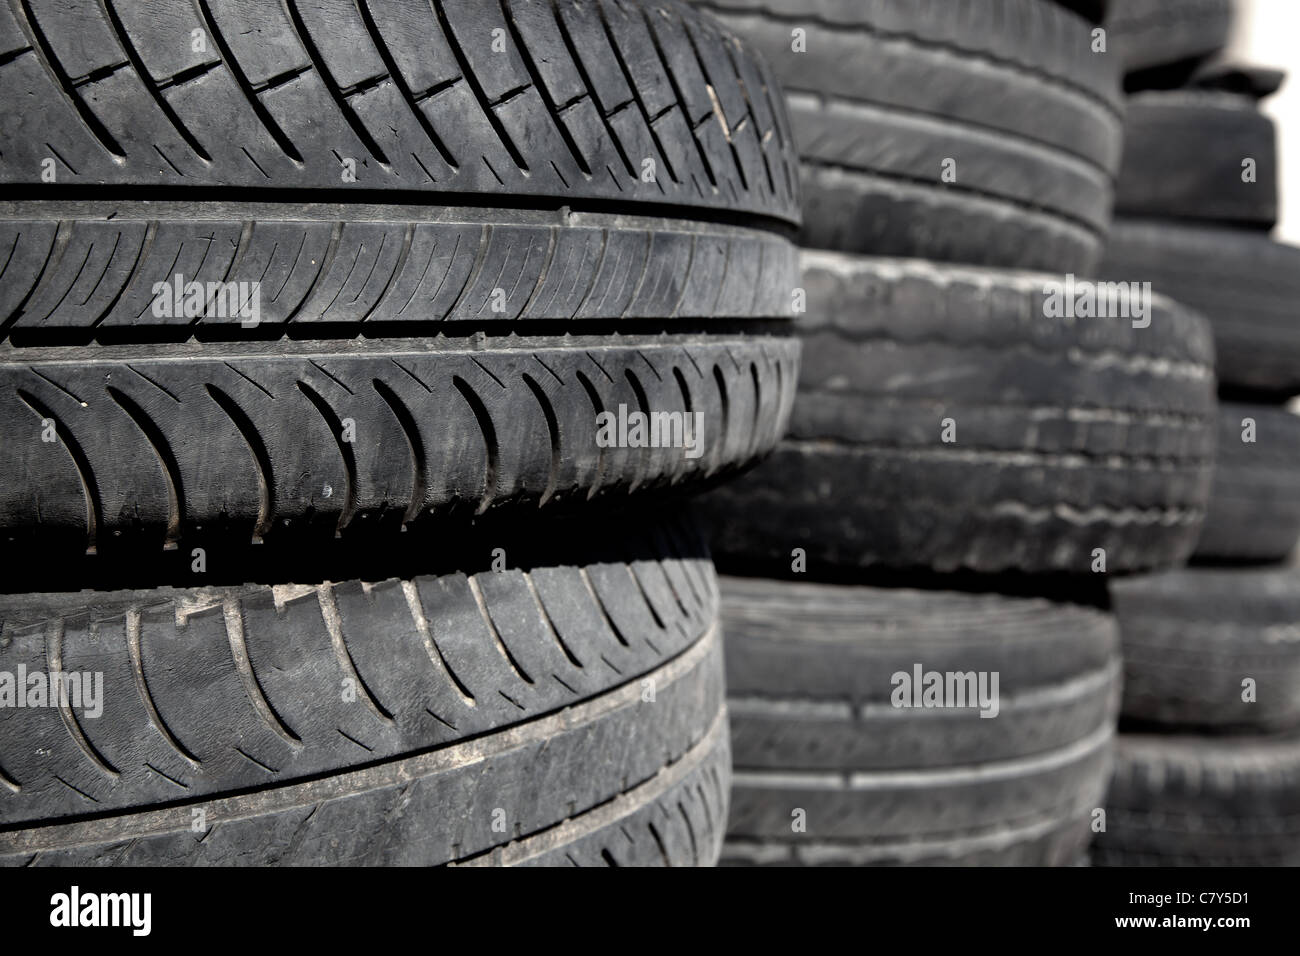 car tires Stock Photo